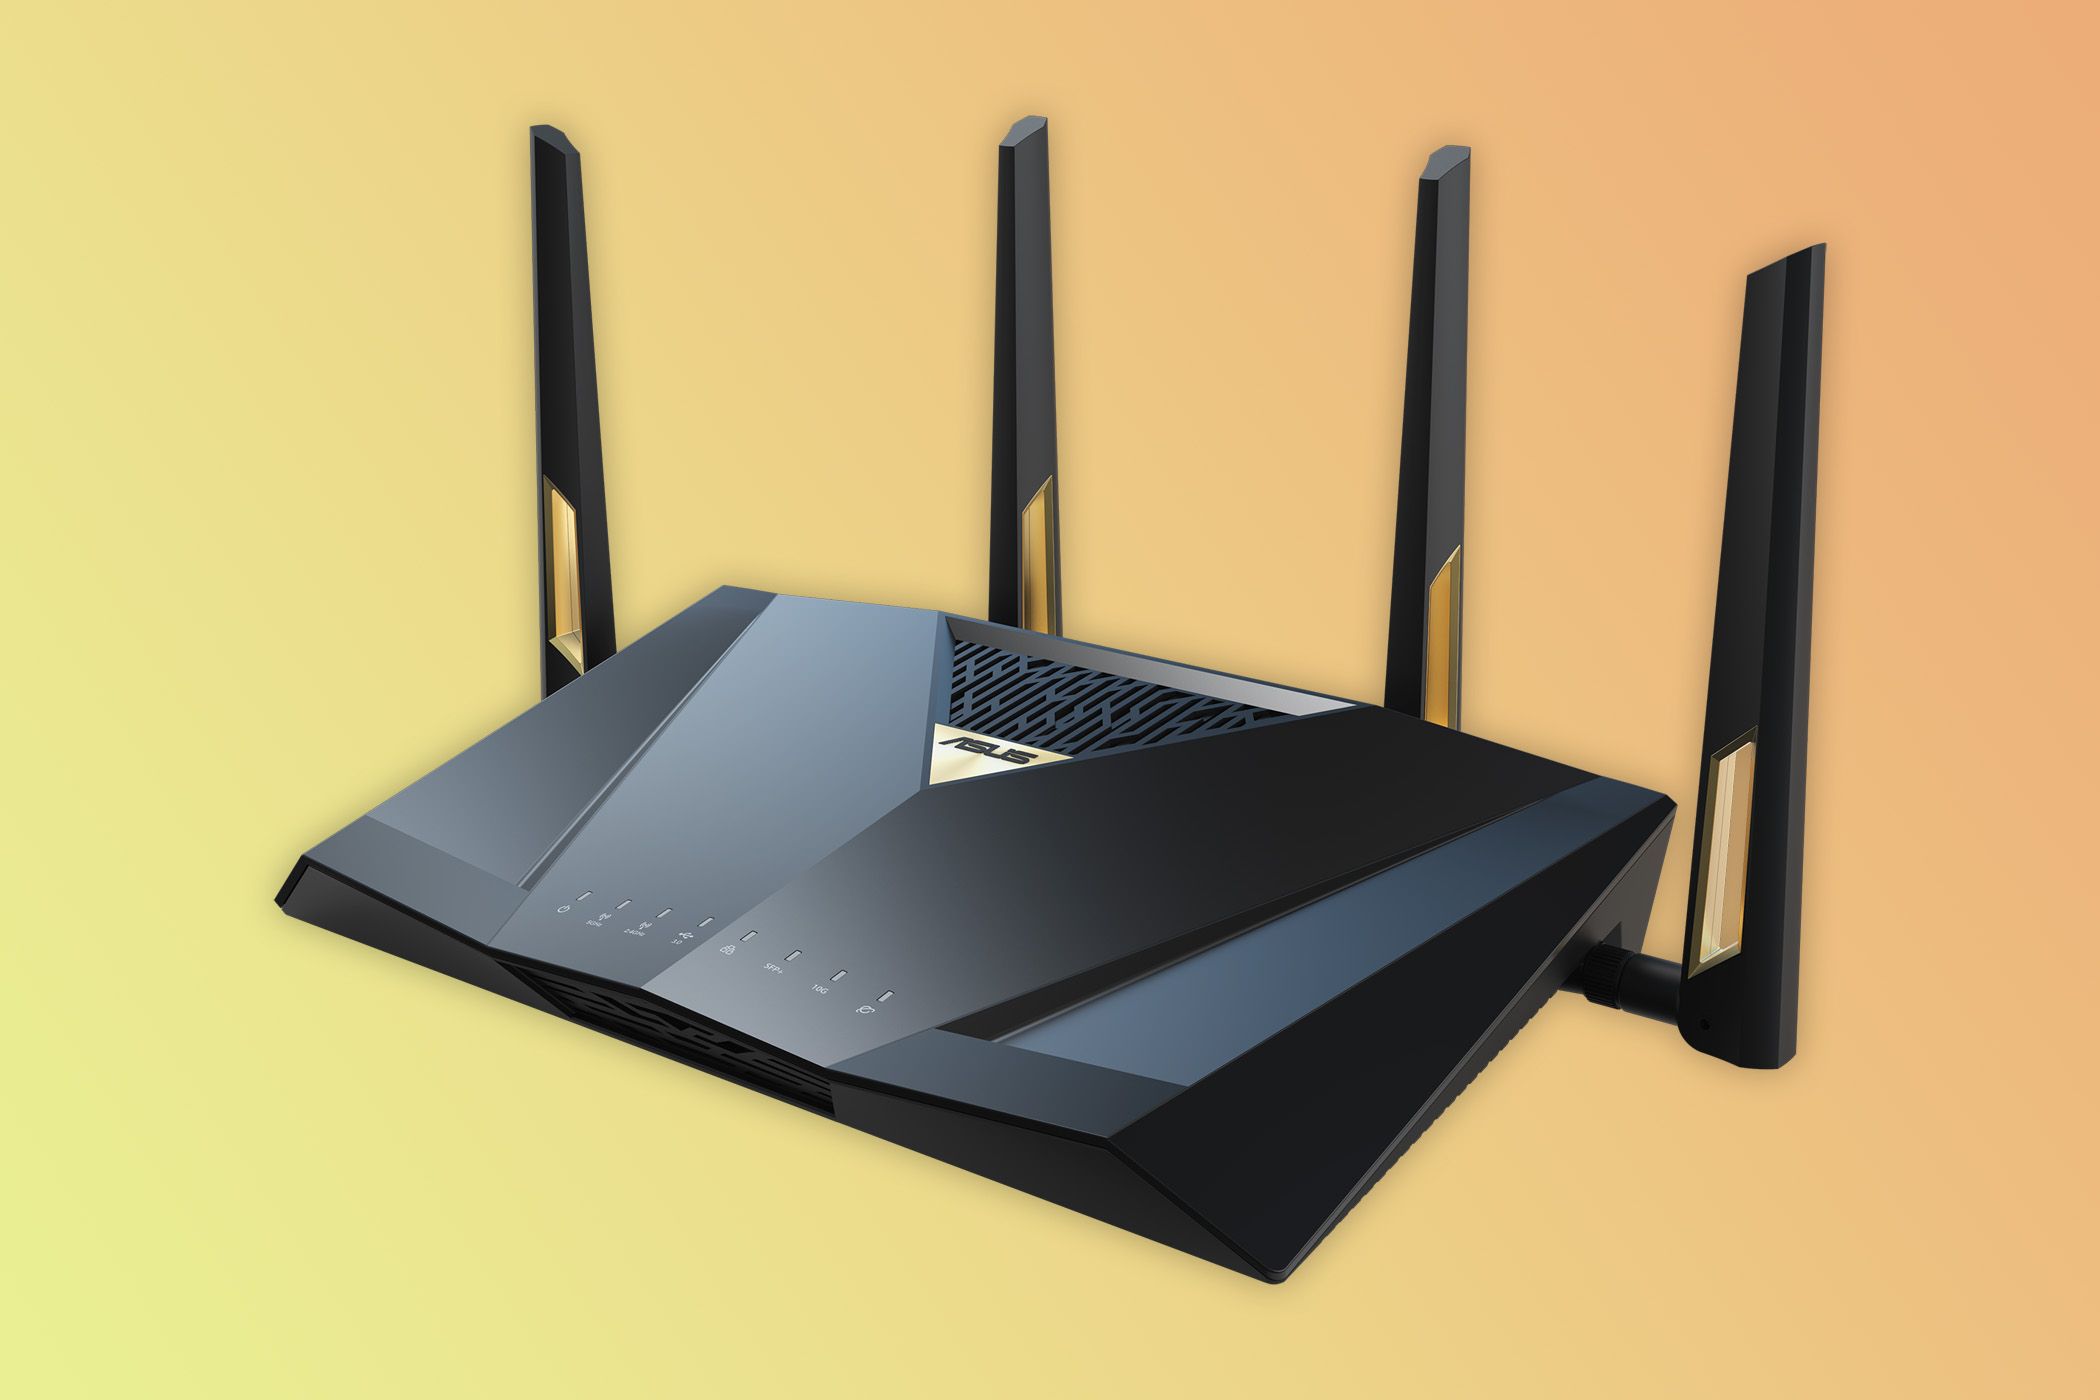 Black router with four antennas.